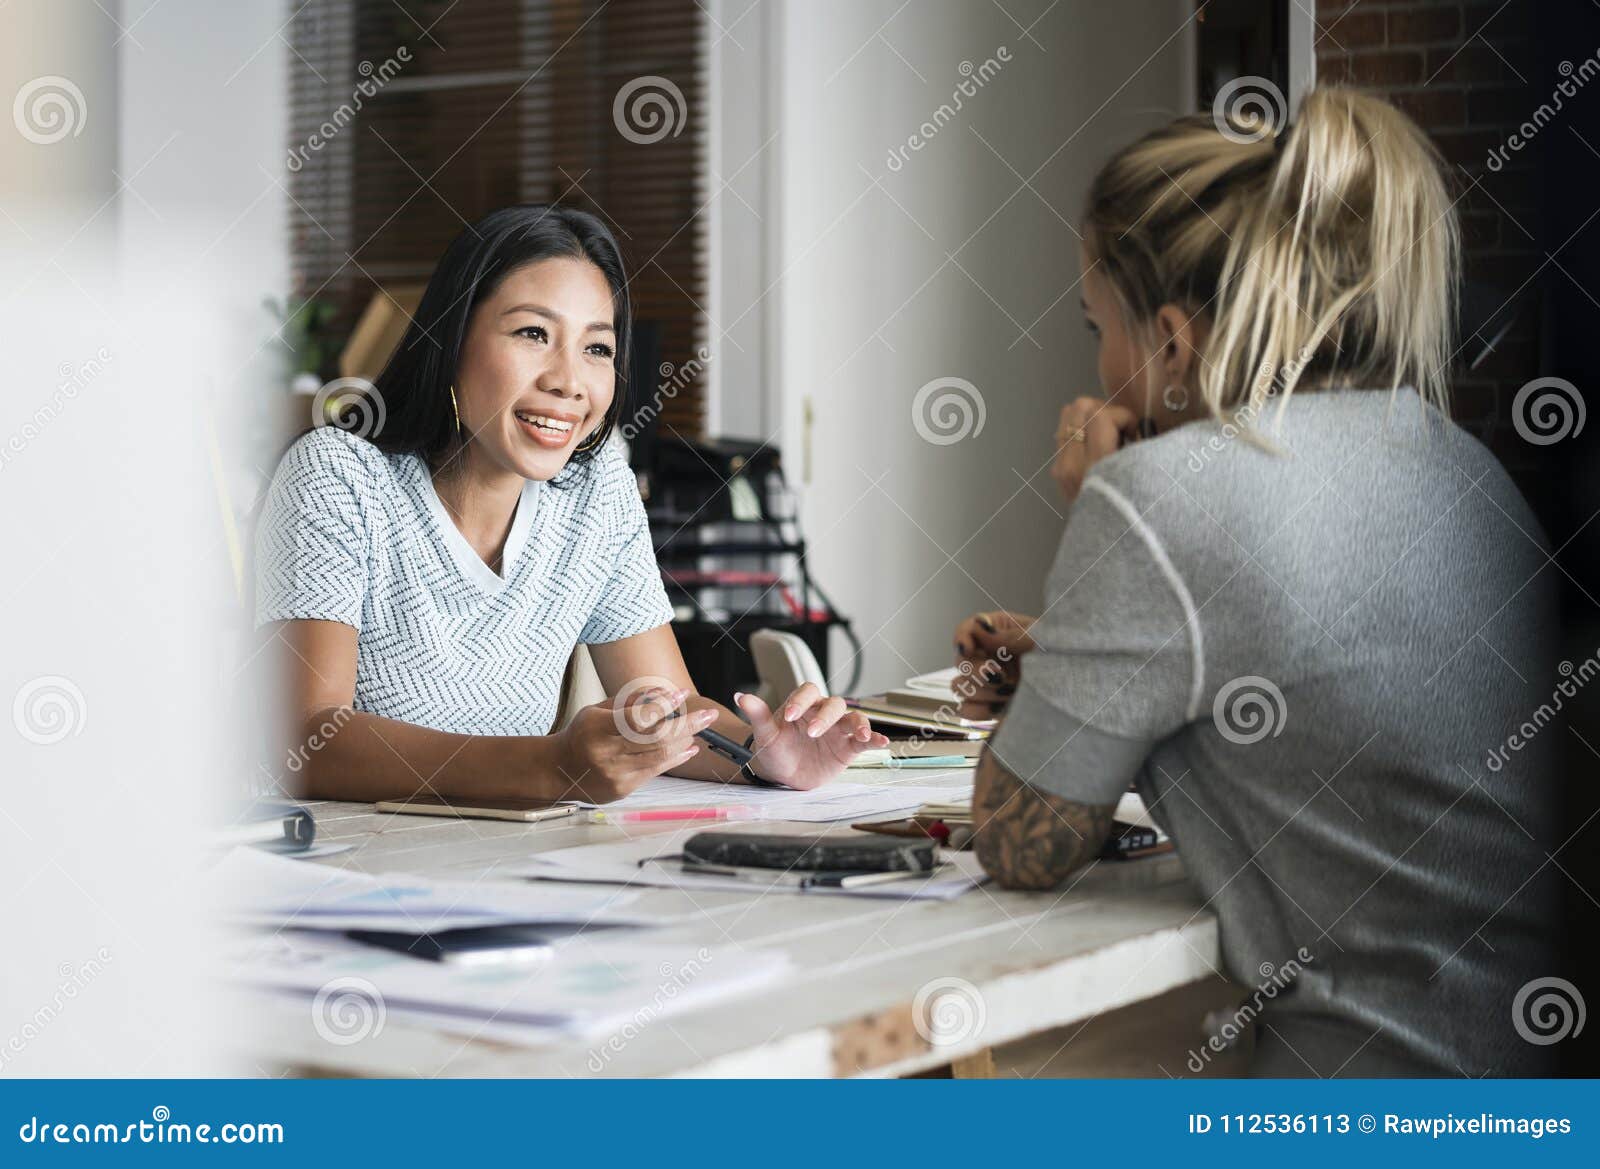 diverse women friends talking together